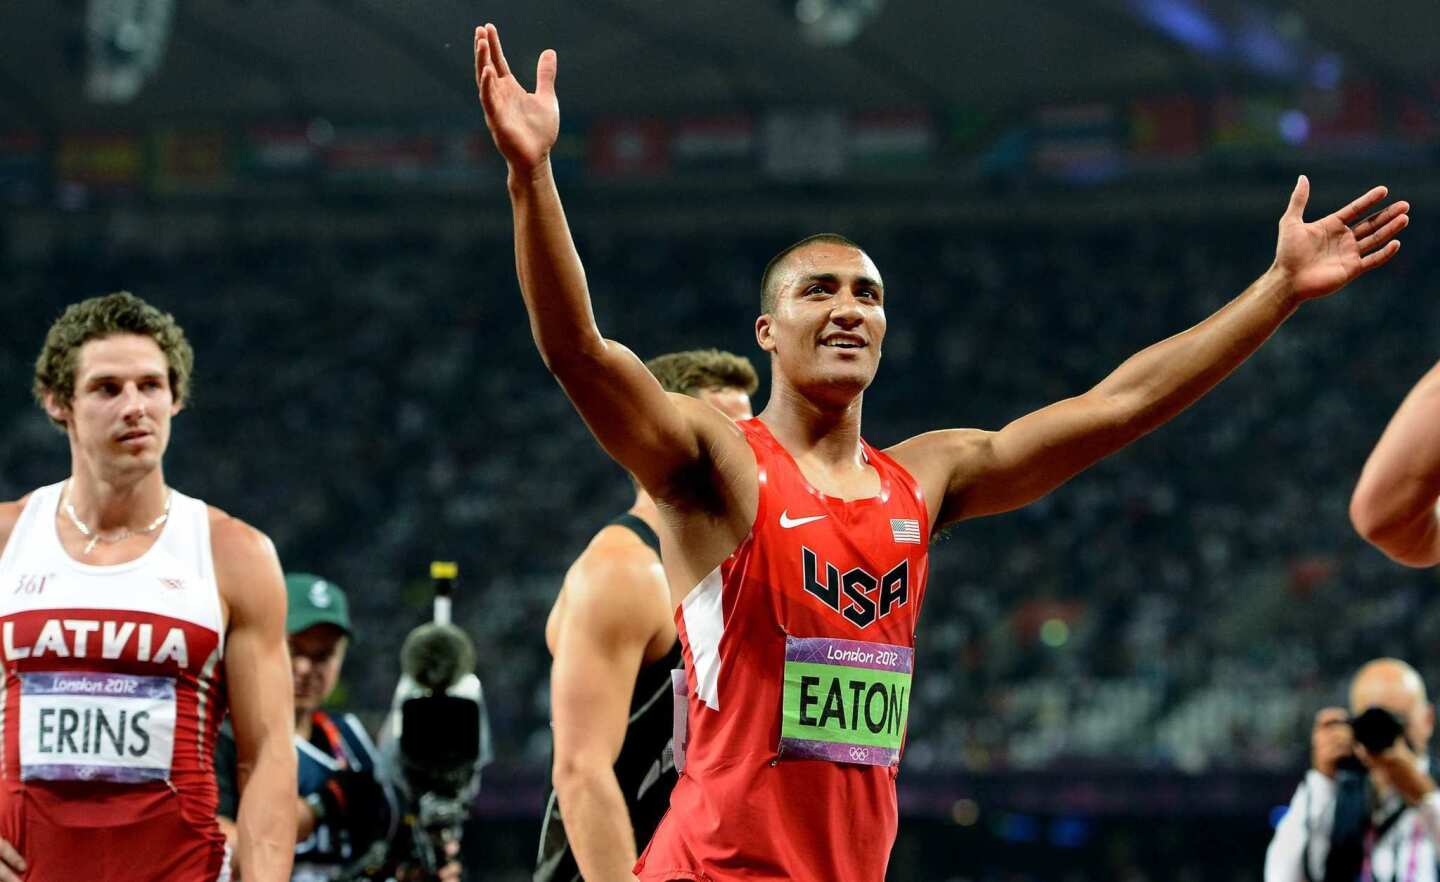 U.S. competitor Ashton Eaton celebrates winning the gold medal in the decathlon on Thursday.